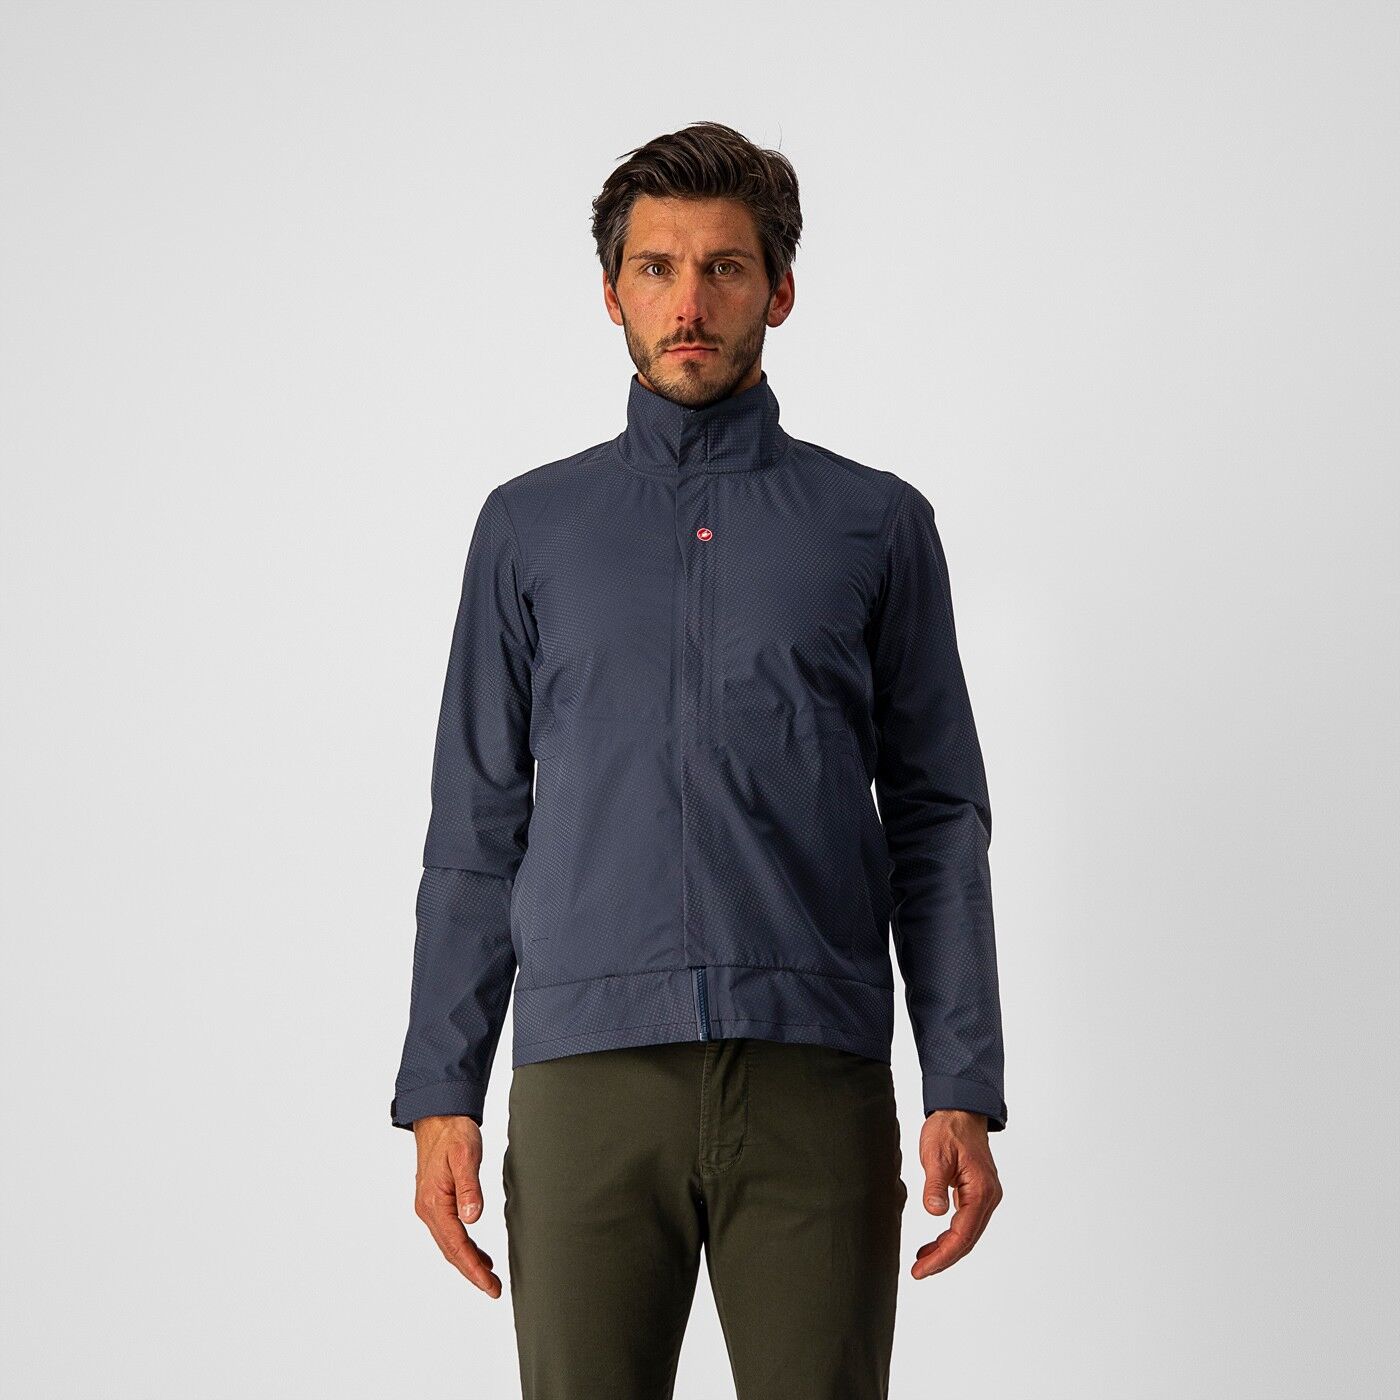 Castelli Commuter Reflex Jacket - Cycling jacket - Men's